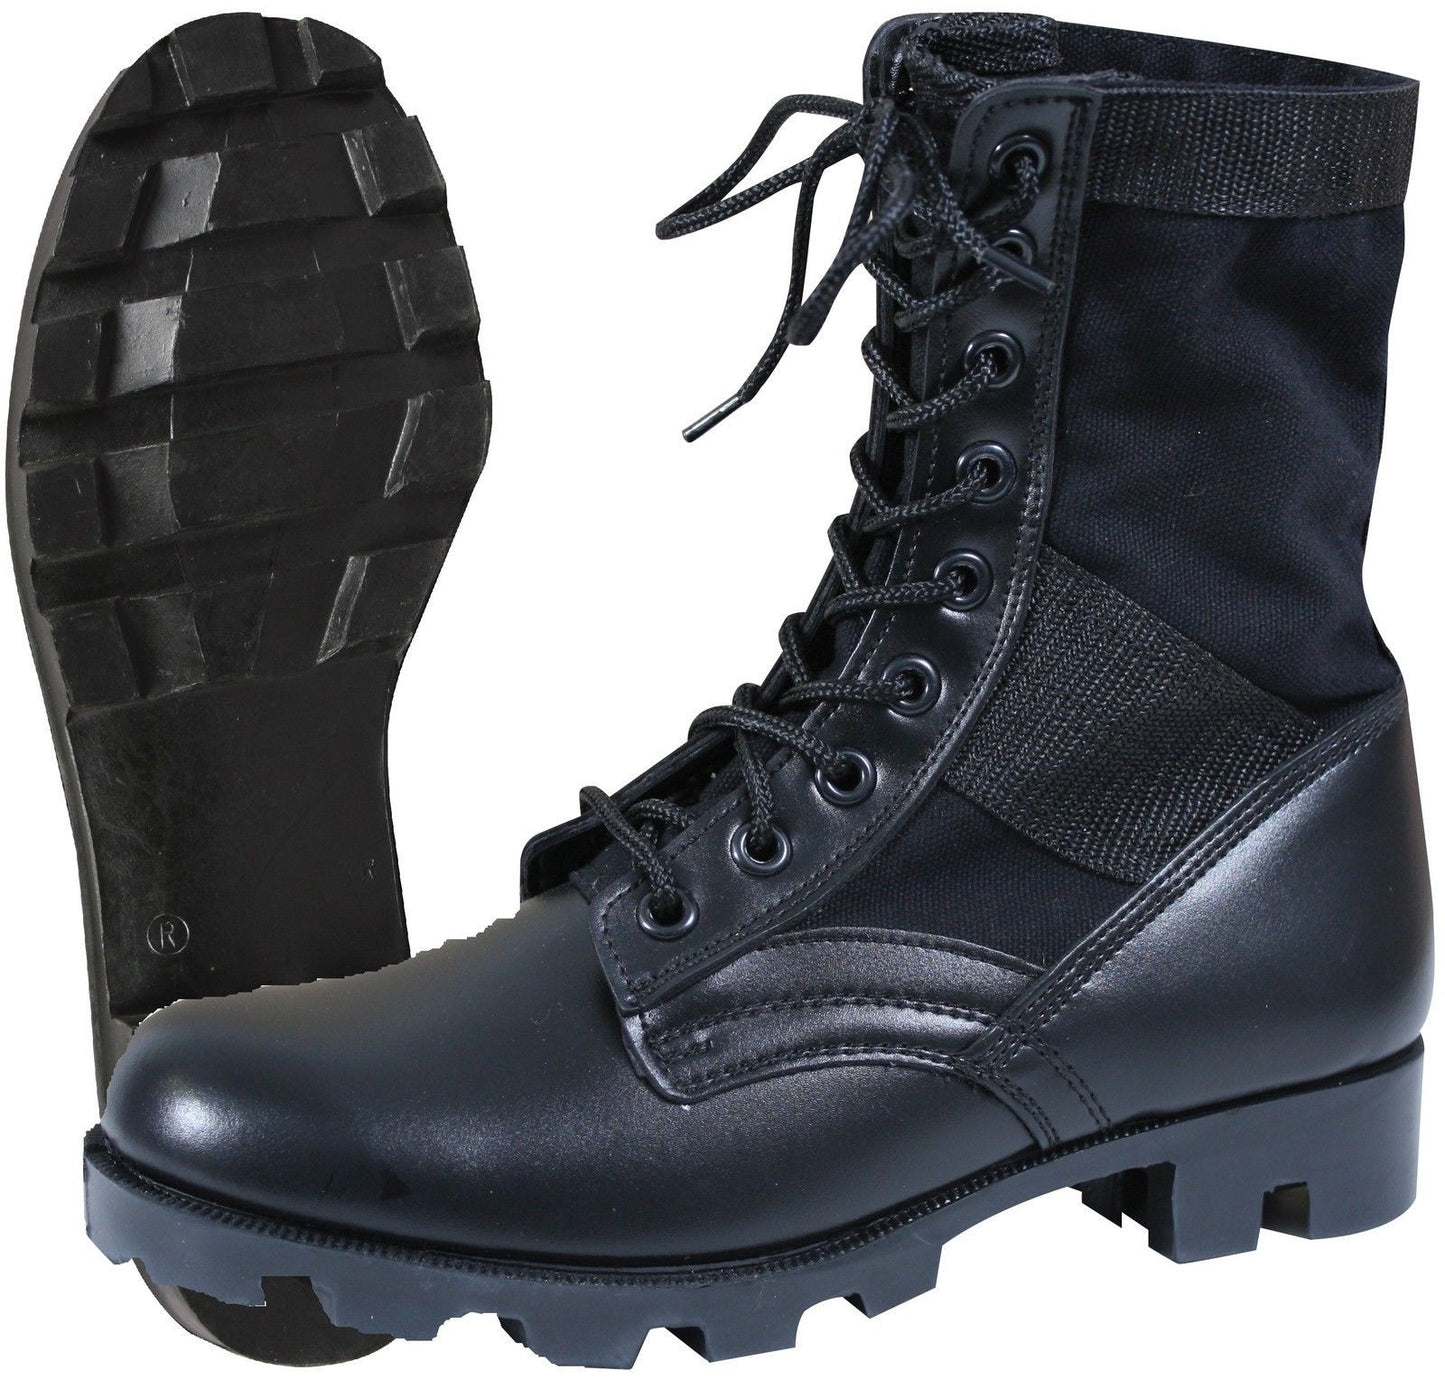 Rothco Black Steel Toe Jungle Boot - GI Style Footwear